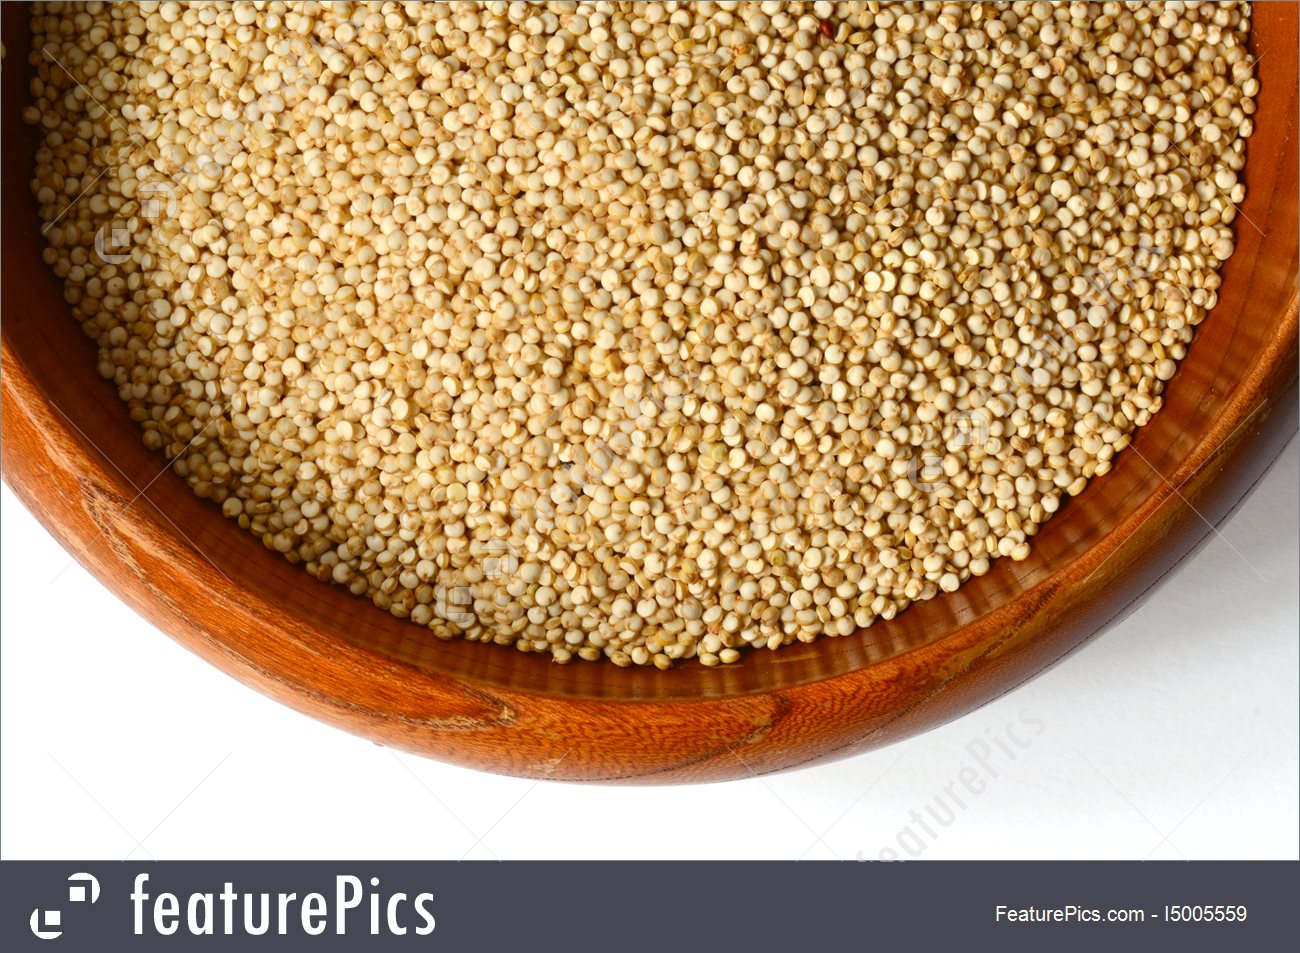 1584098443_quinoa-seeds-stock-picture-4005559.jpg